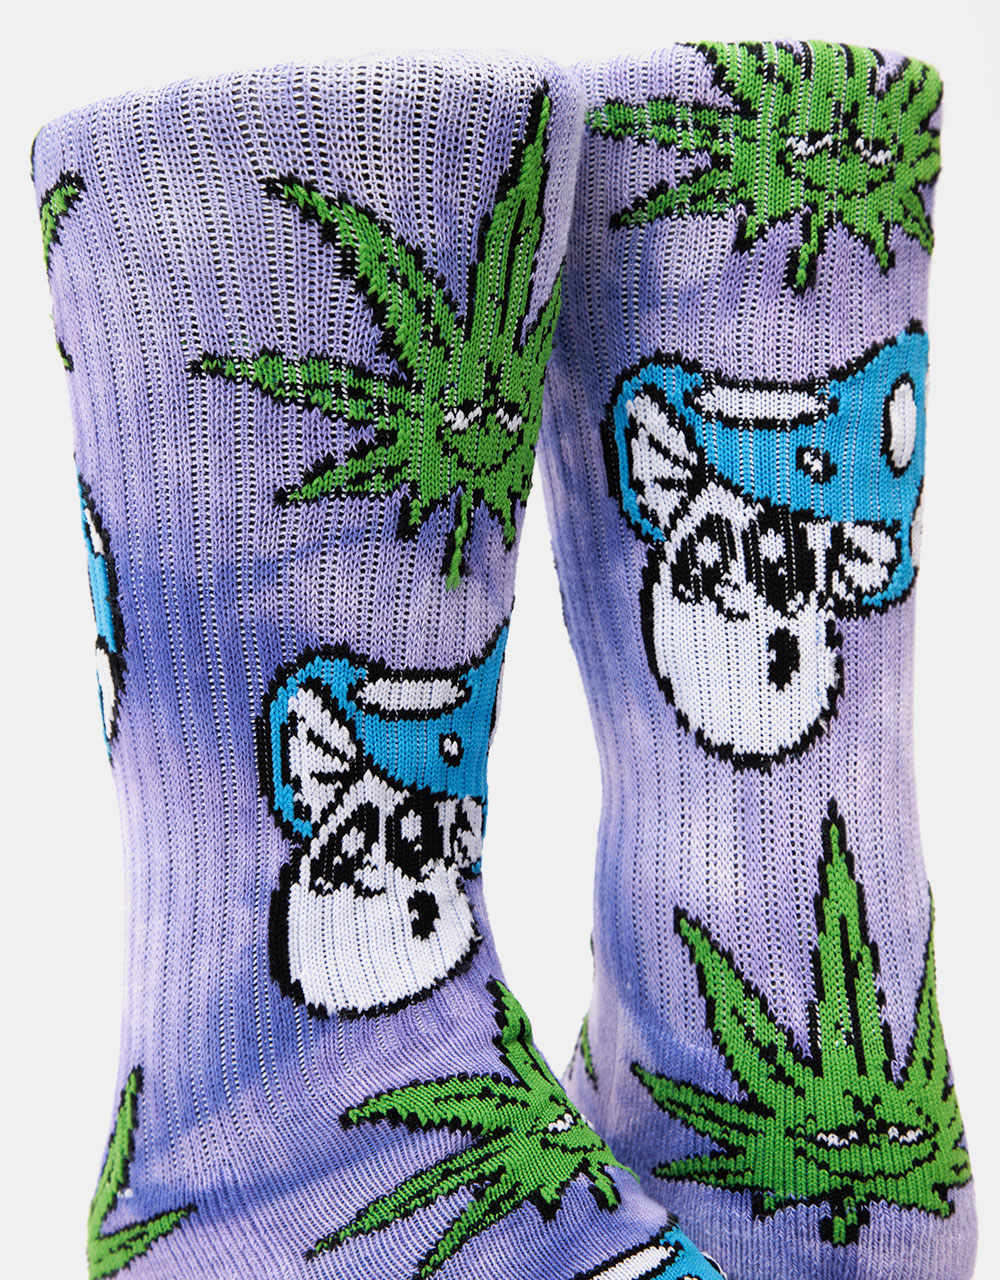 HUF Green Buddy Mushroom Tie Dye Socks - Purple